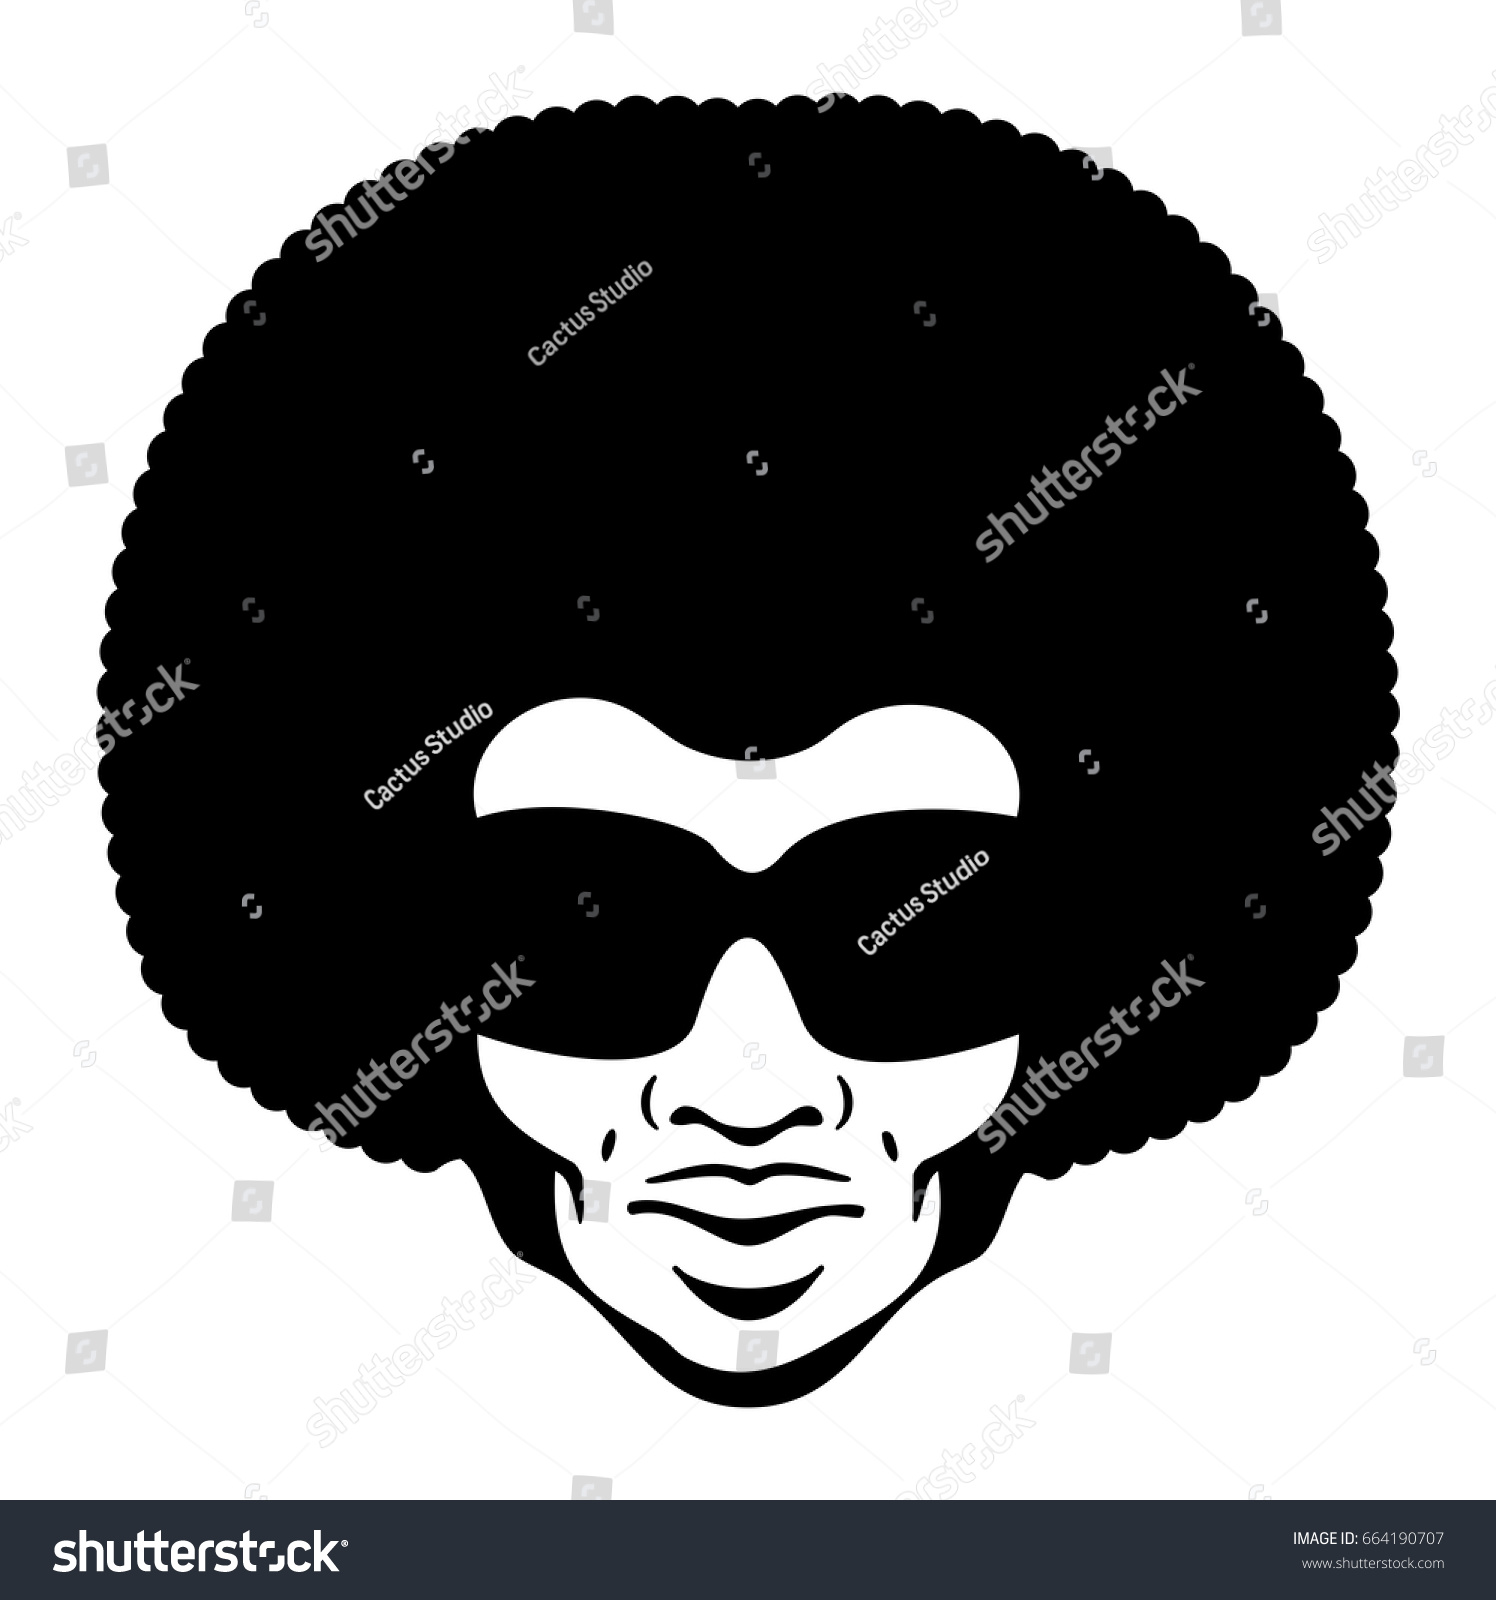 SVG of Afro style man portrait. Editable vector illustration. svg